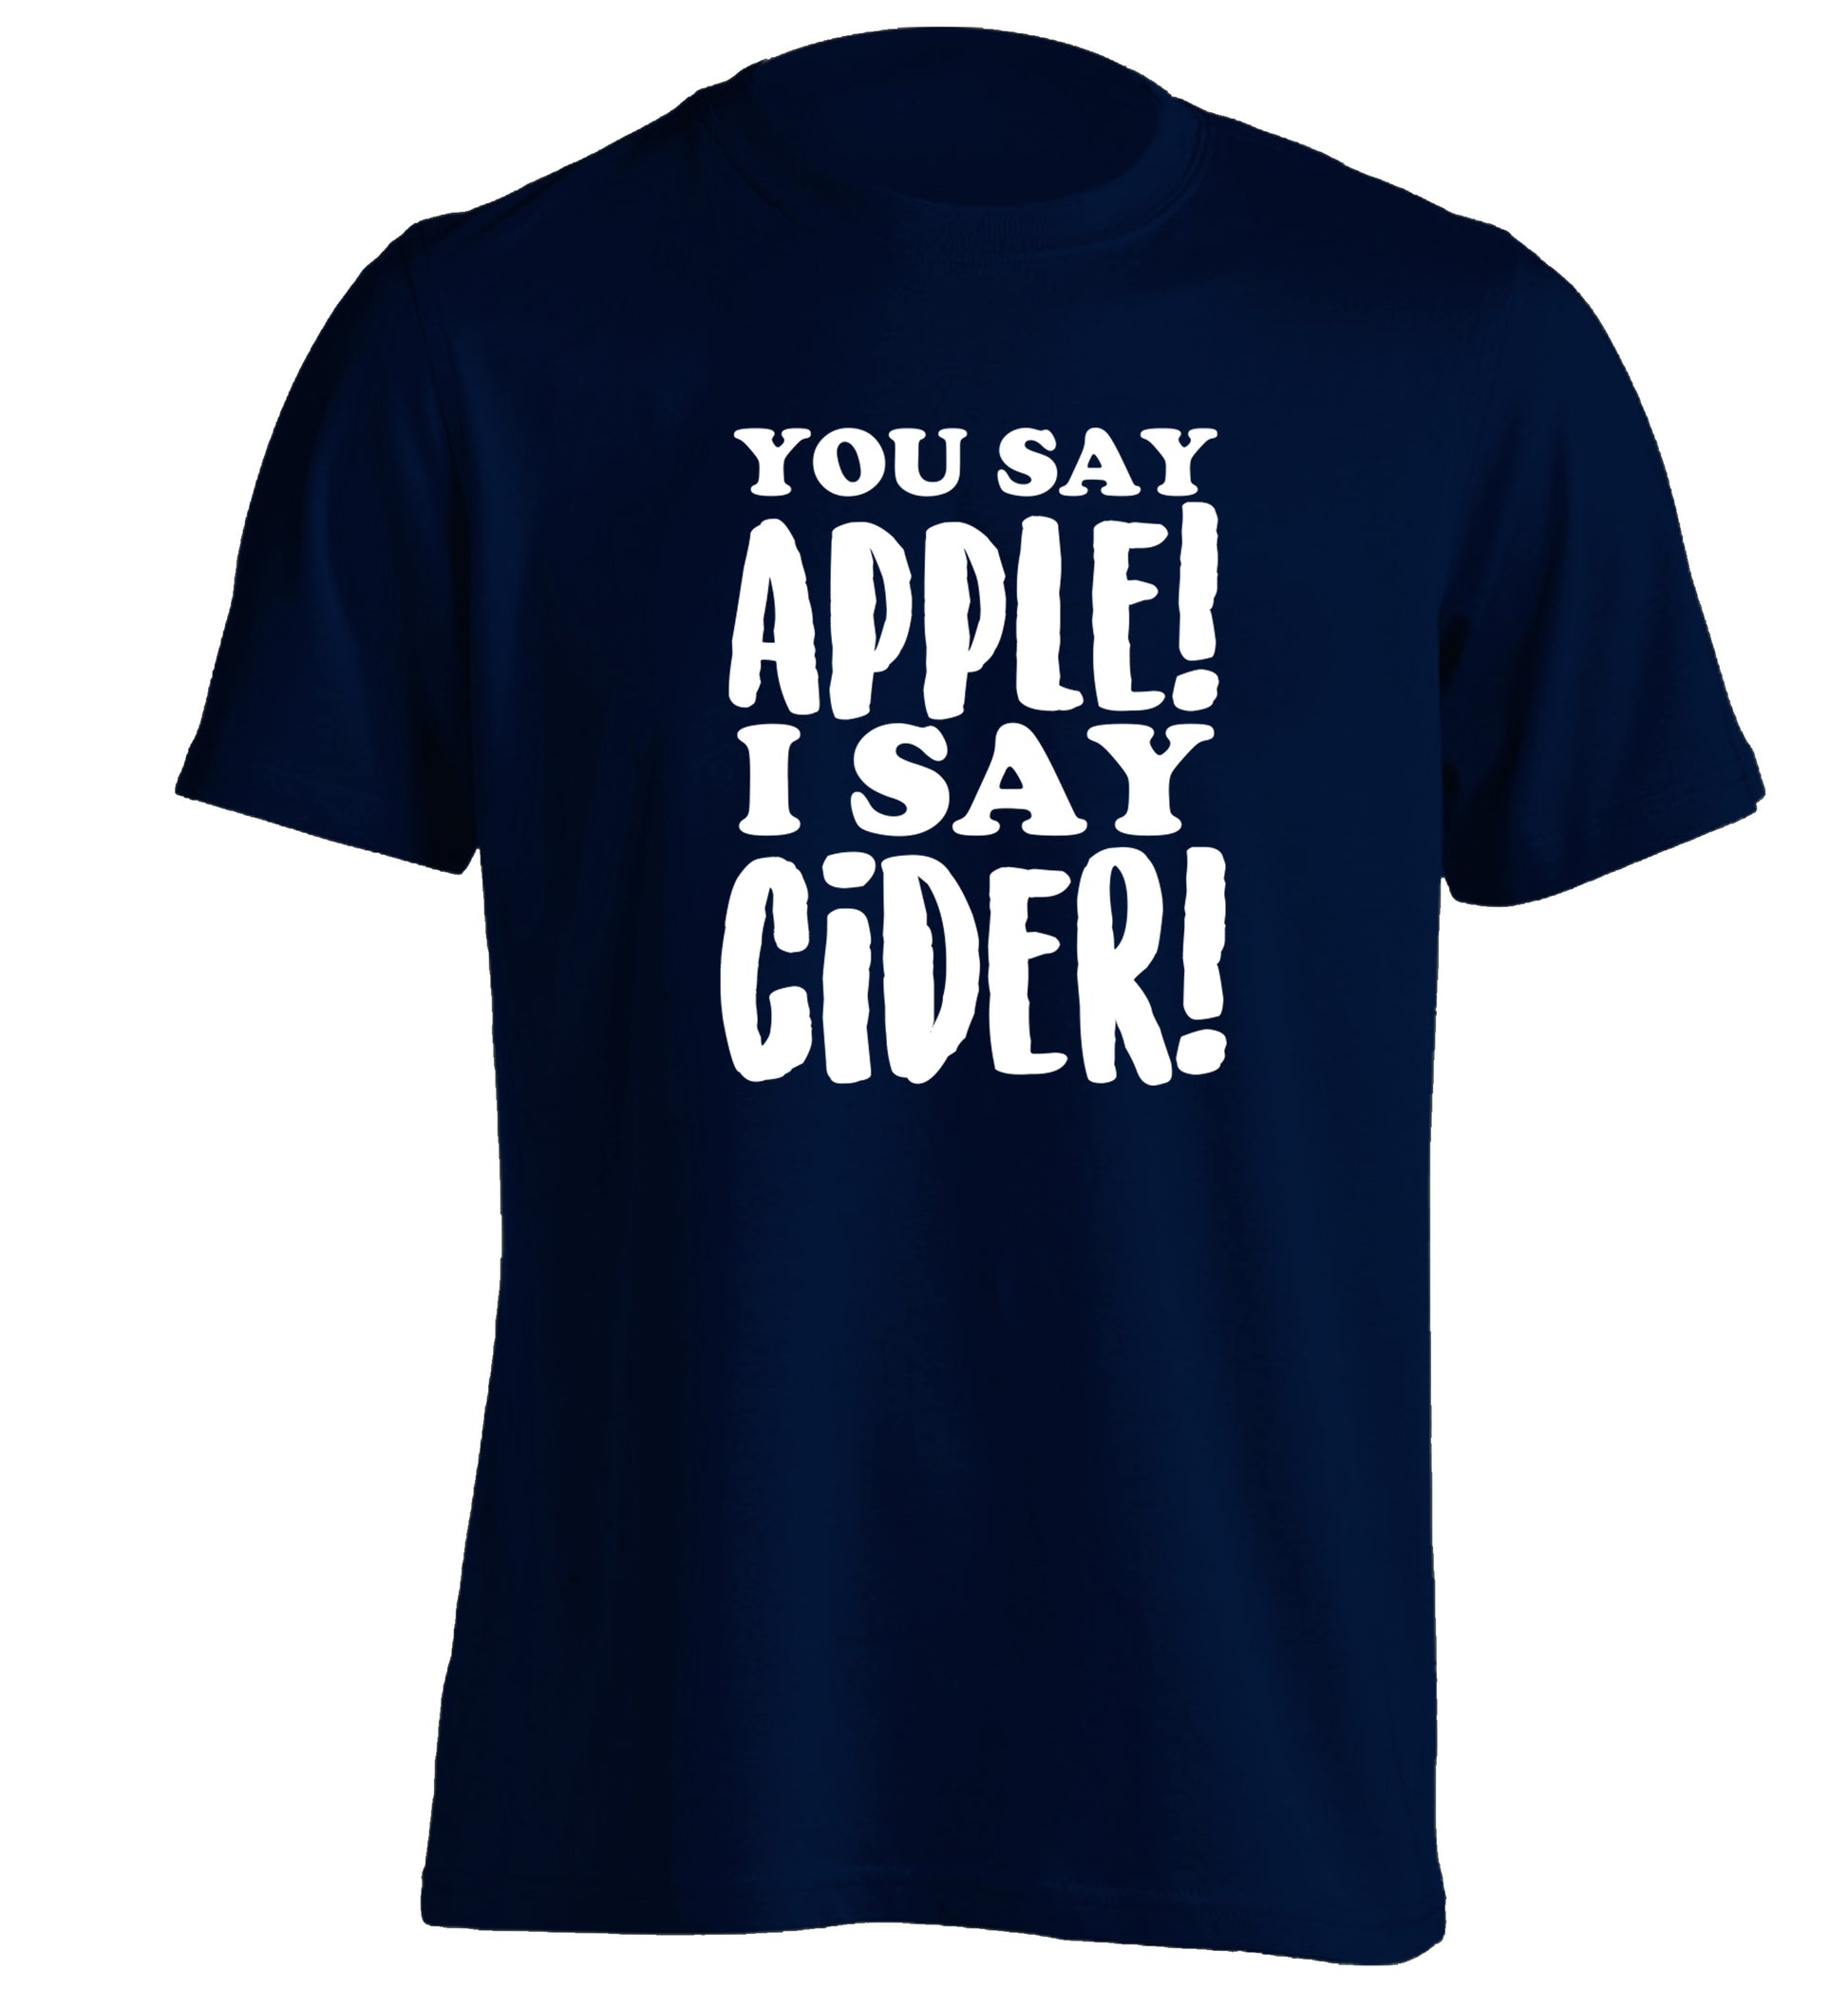 You say apple I say cider! adults unisex navy Tshirt 2XL